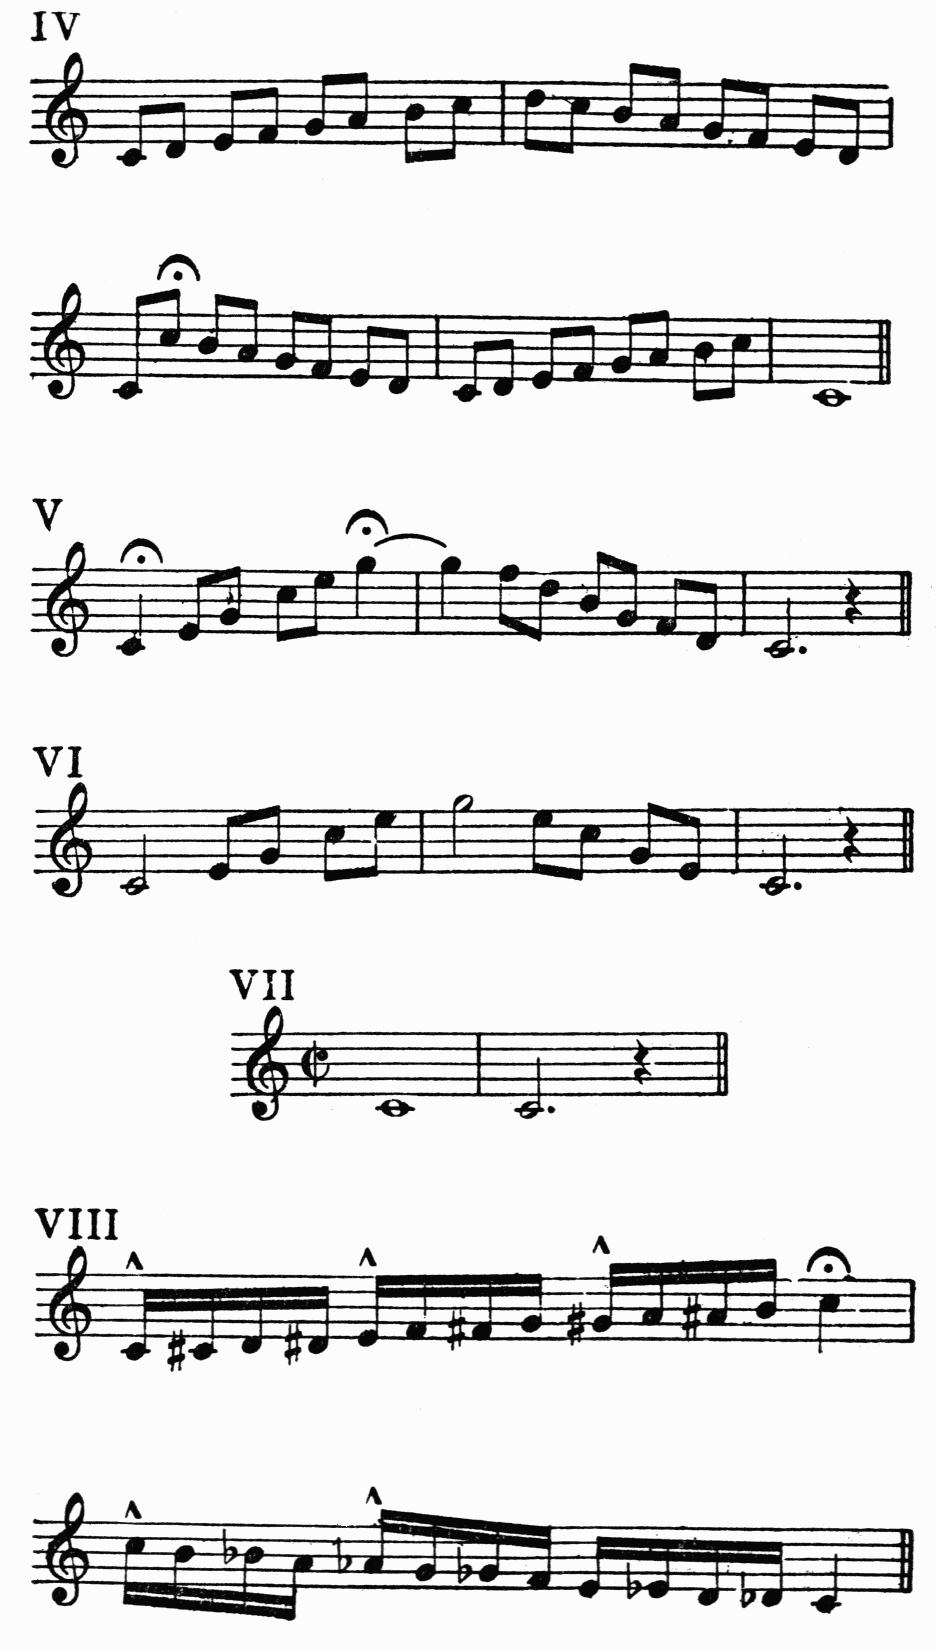 VI-VIII, musical notation